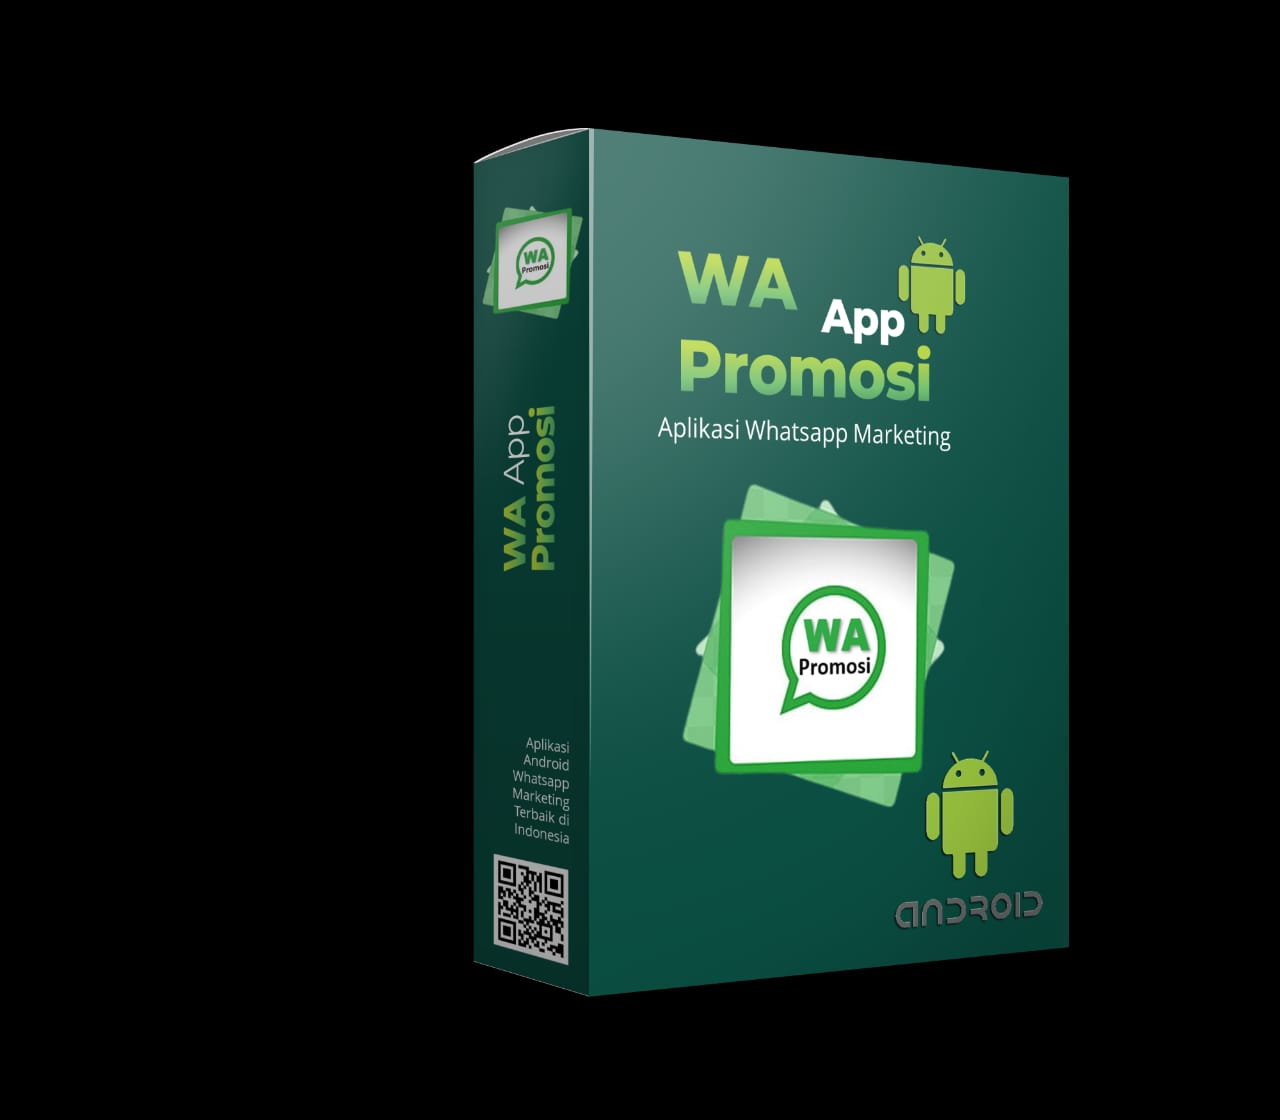 Whatsapp promosi android